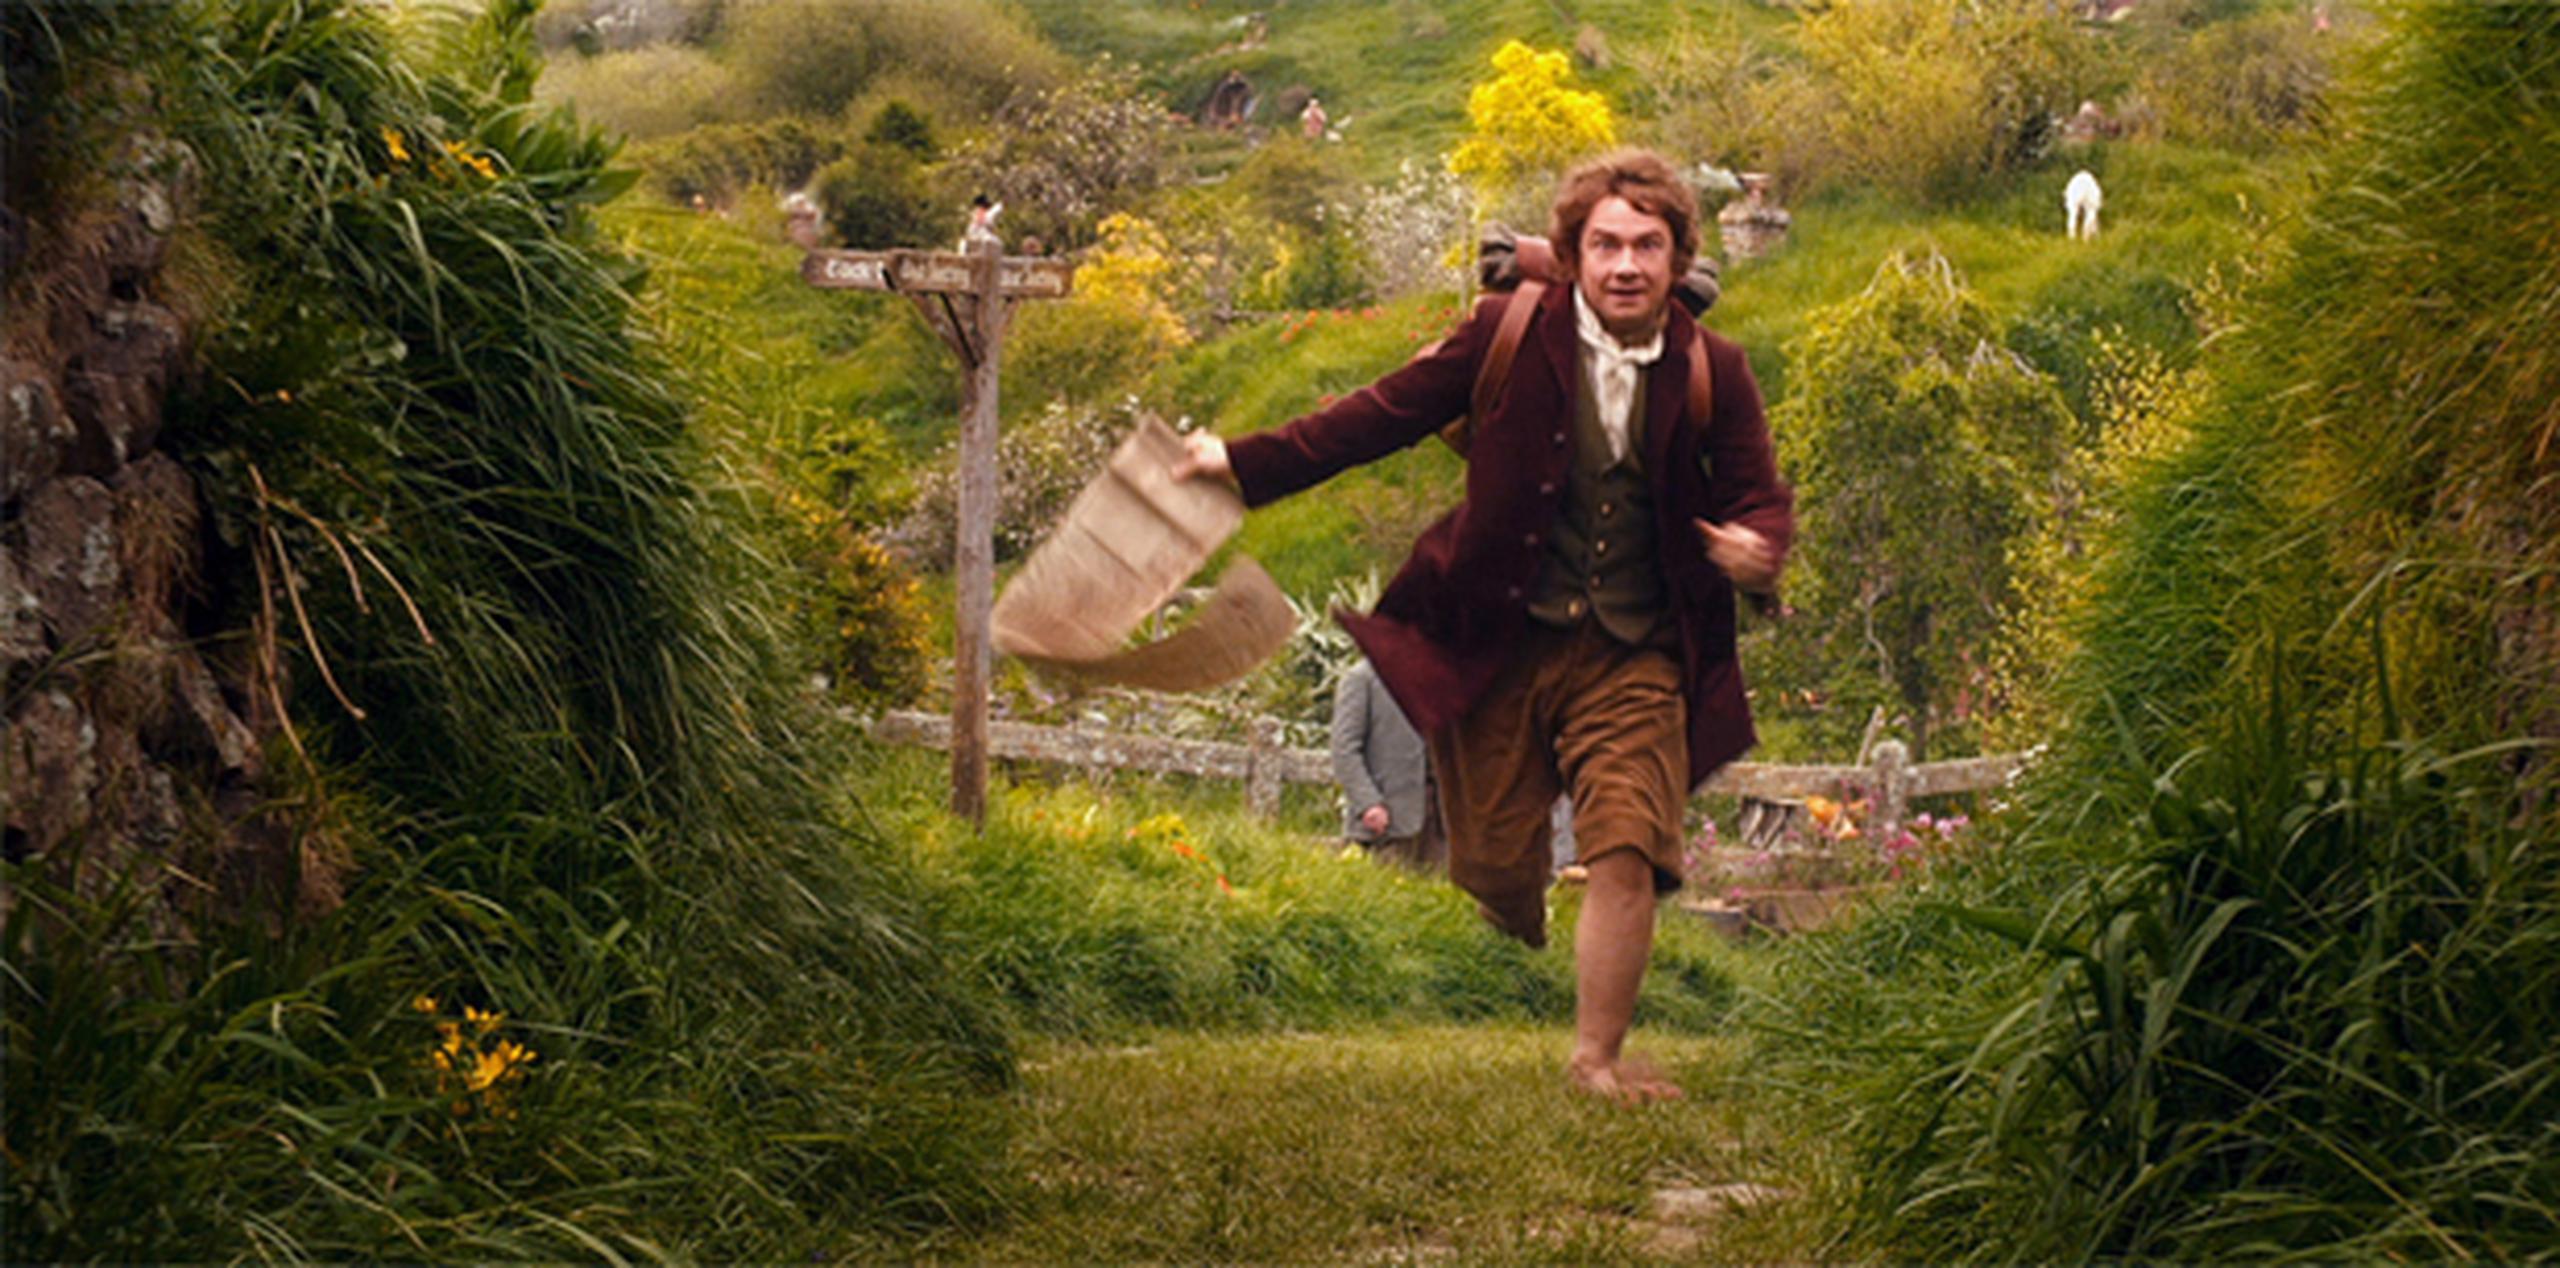 La tercera película "The Hobbit: There and Back Again" se estrenará en diciembre del próximo año.